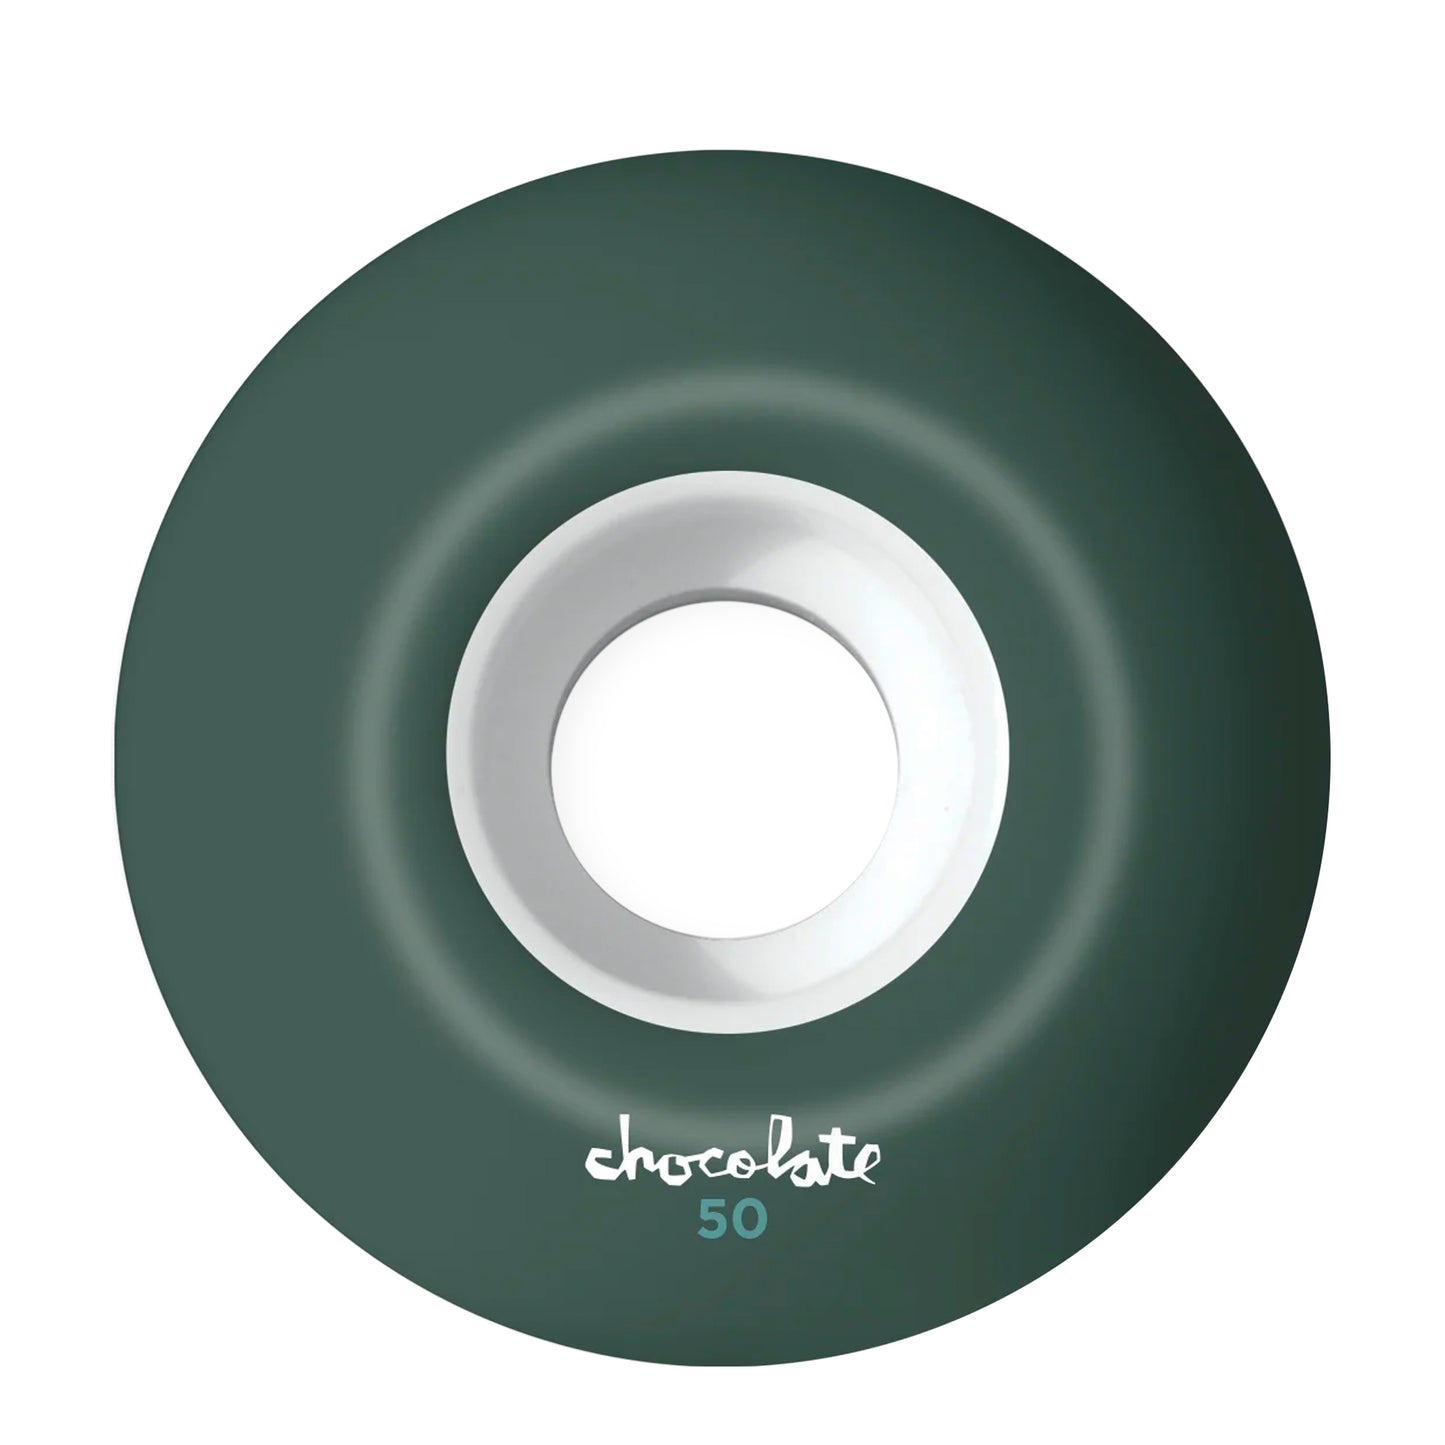 Chocolate - 50mm OG Chunk Staple Wheels - Green - Prime Delux Store